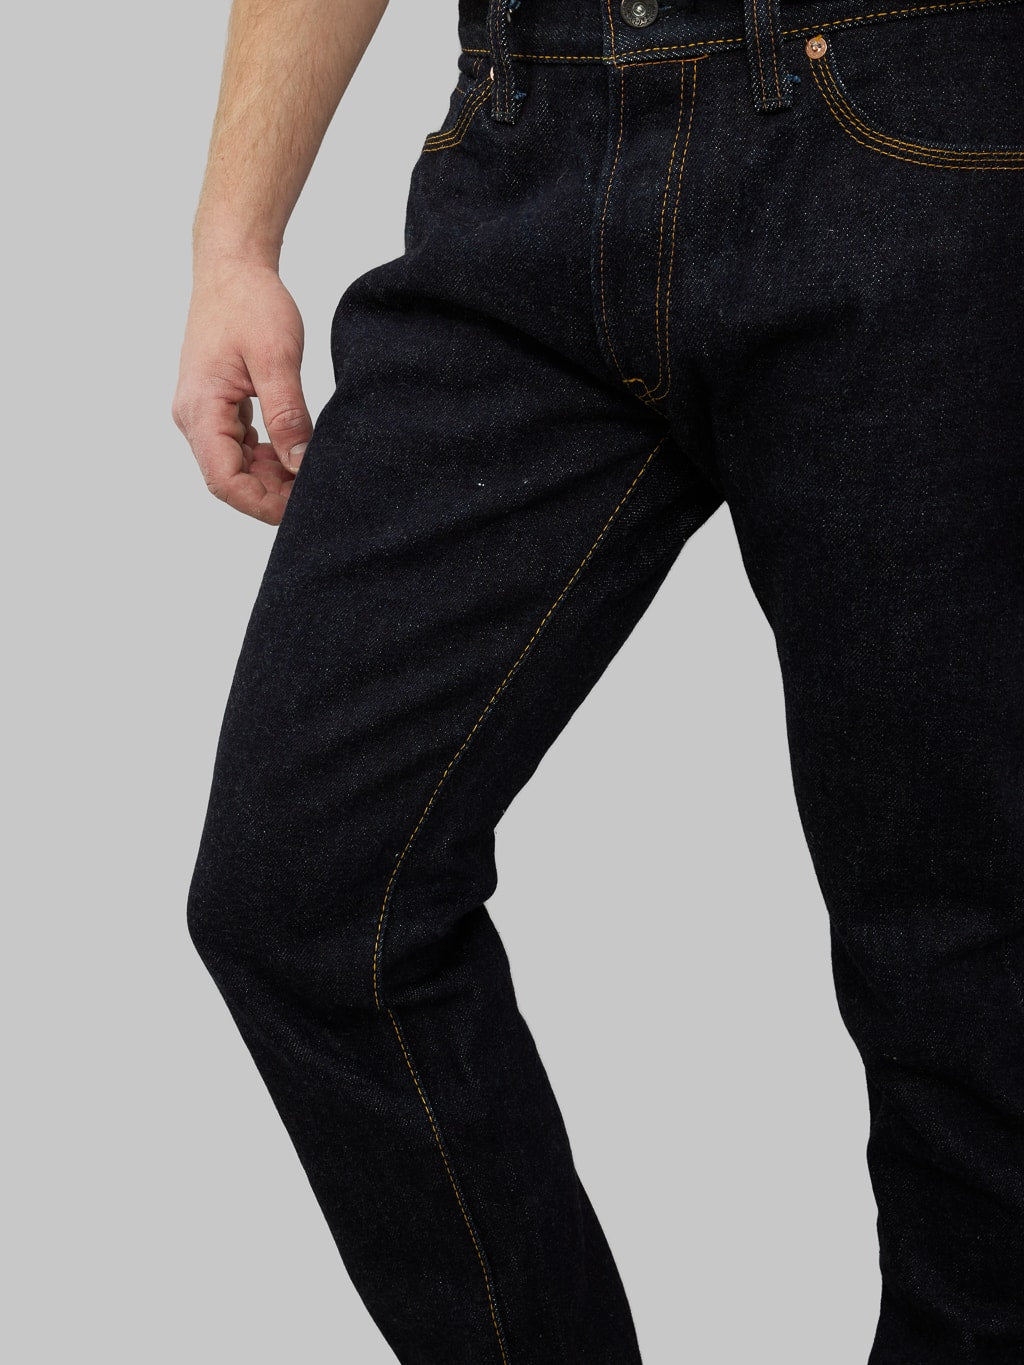 Samurai Jeans S511XX 25oz Kirinji Slim Tapered selvedge Jeans inseam